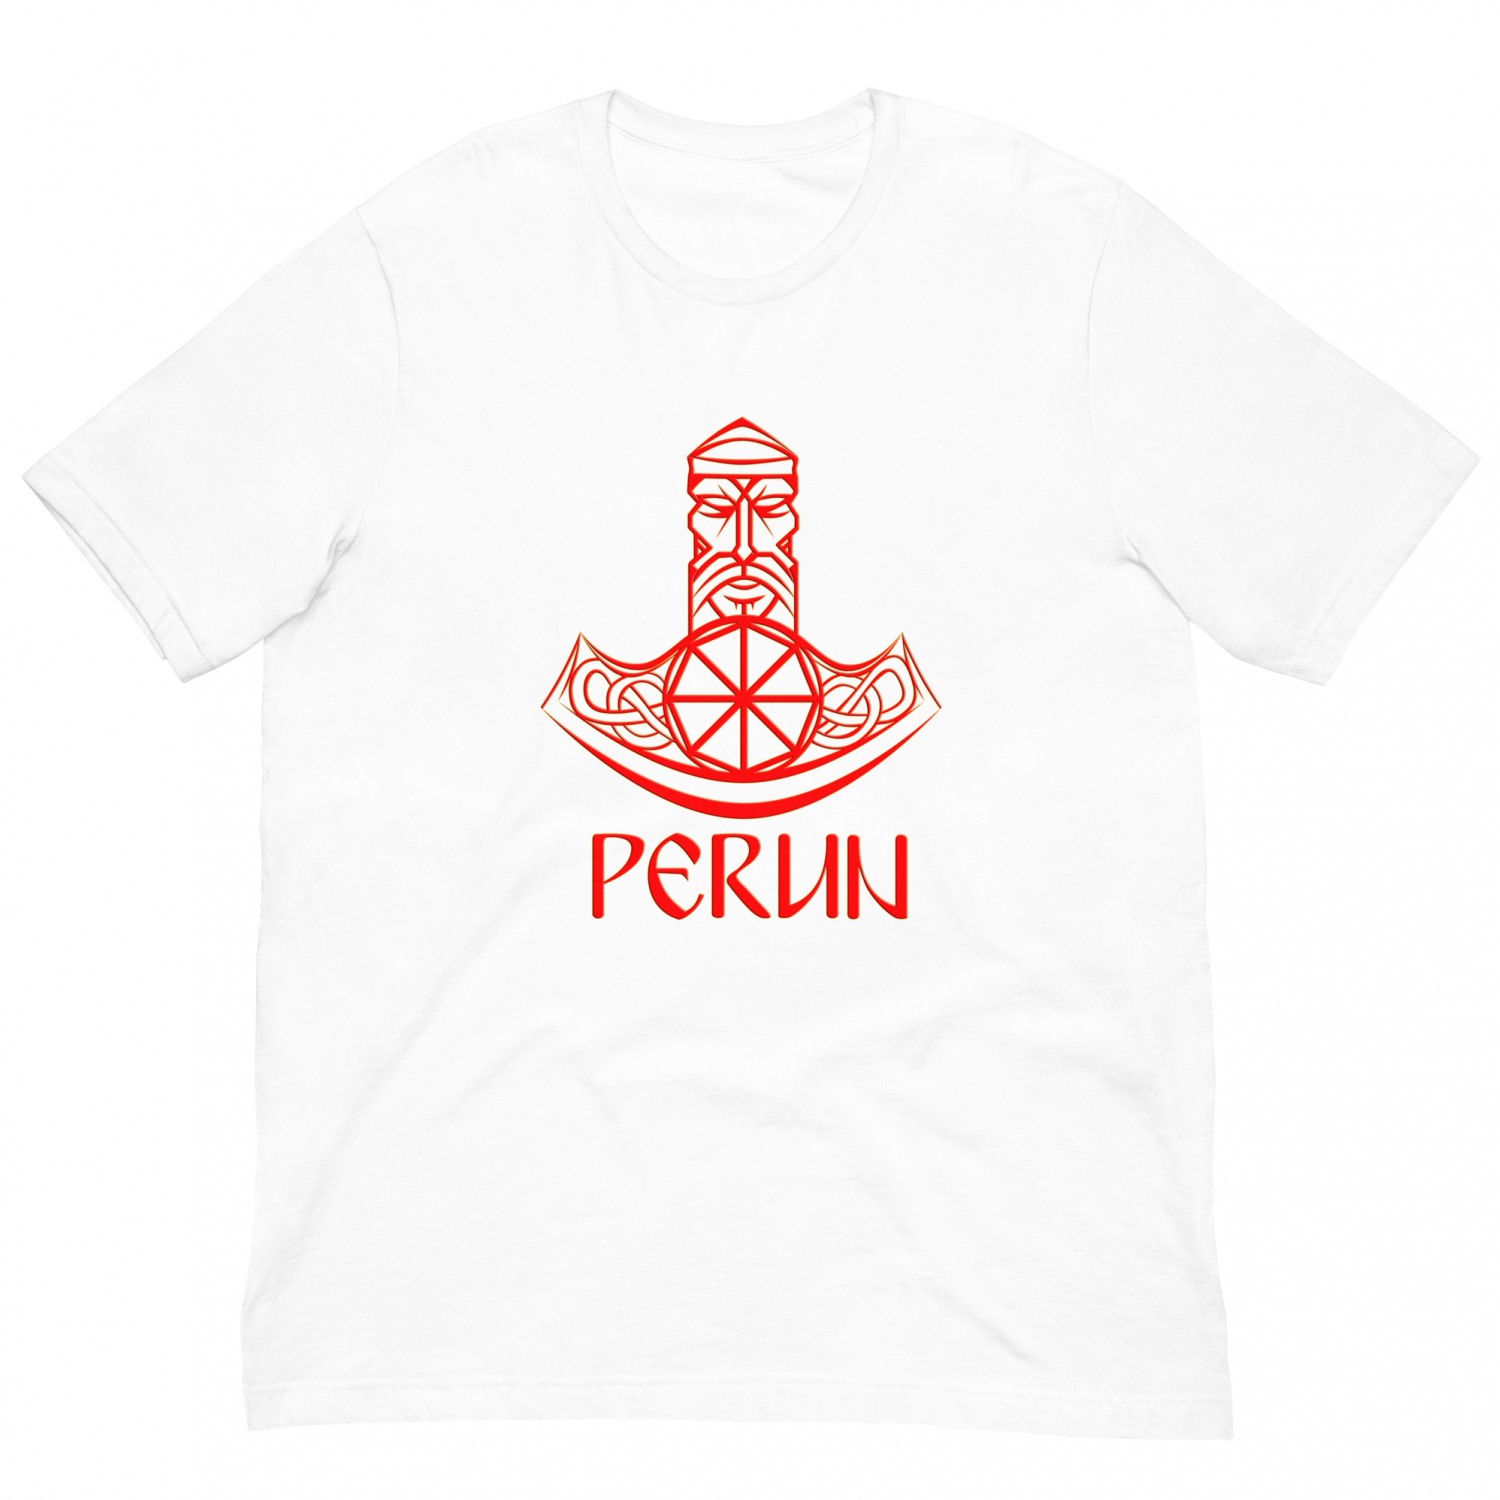 Buy T-shirt "Perun"